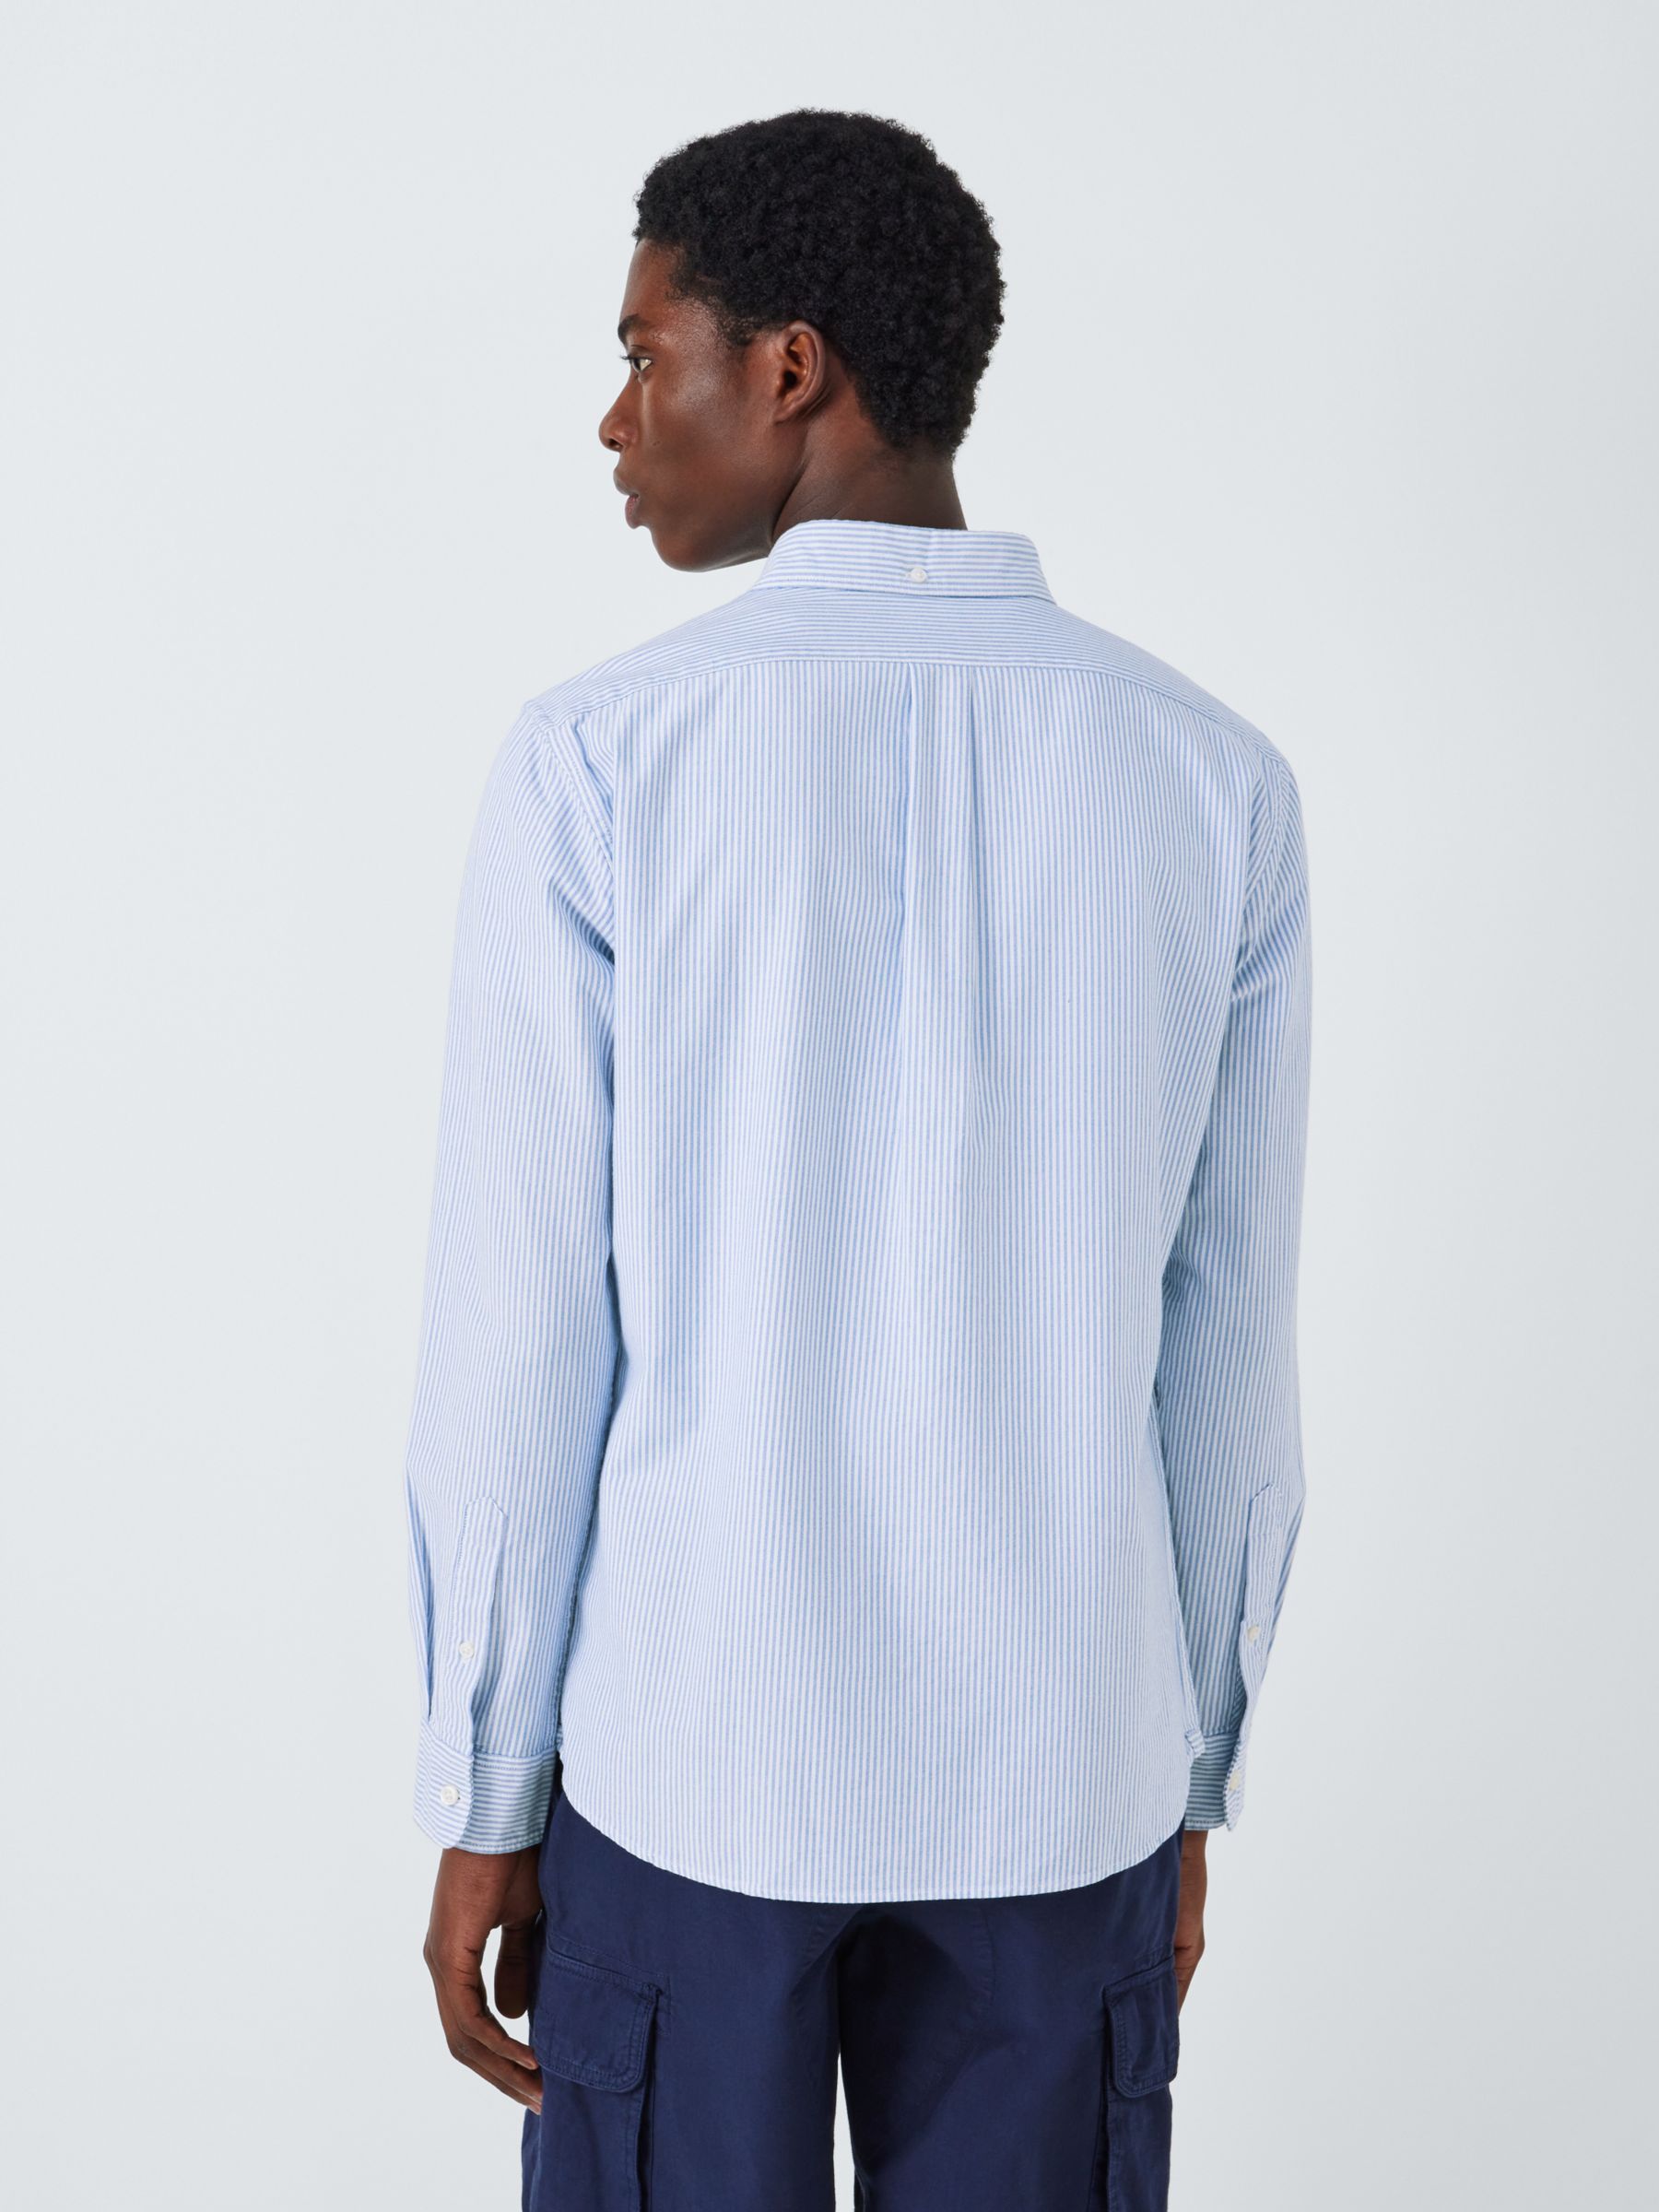 John Lewis Slim Fit Stripe Oxford Shirt, Blue, S